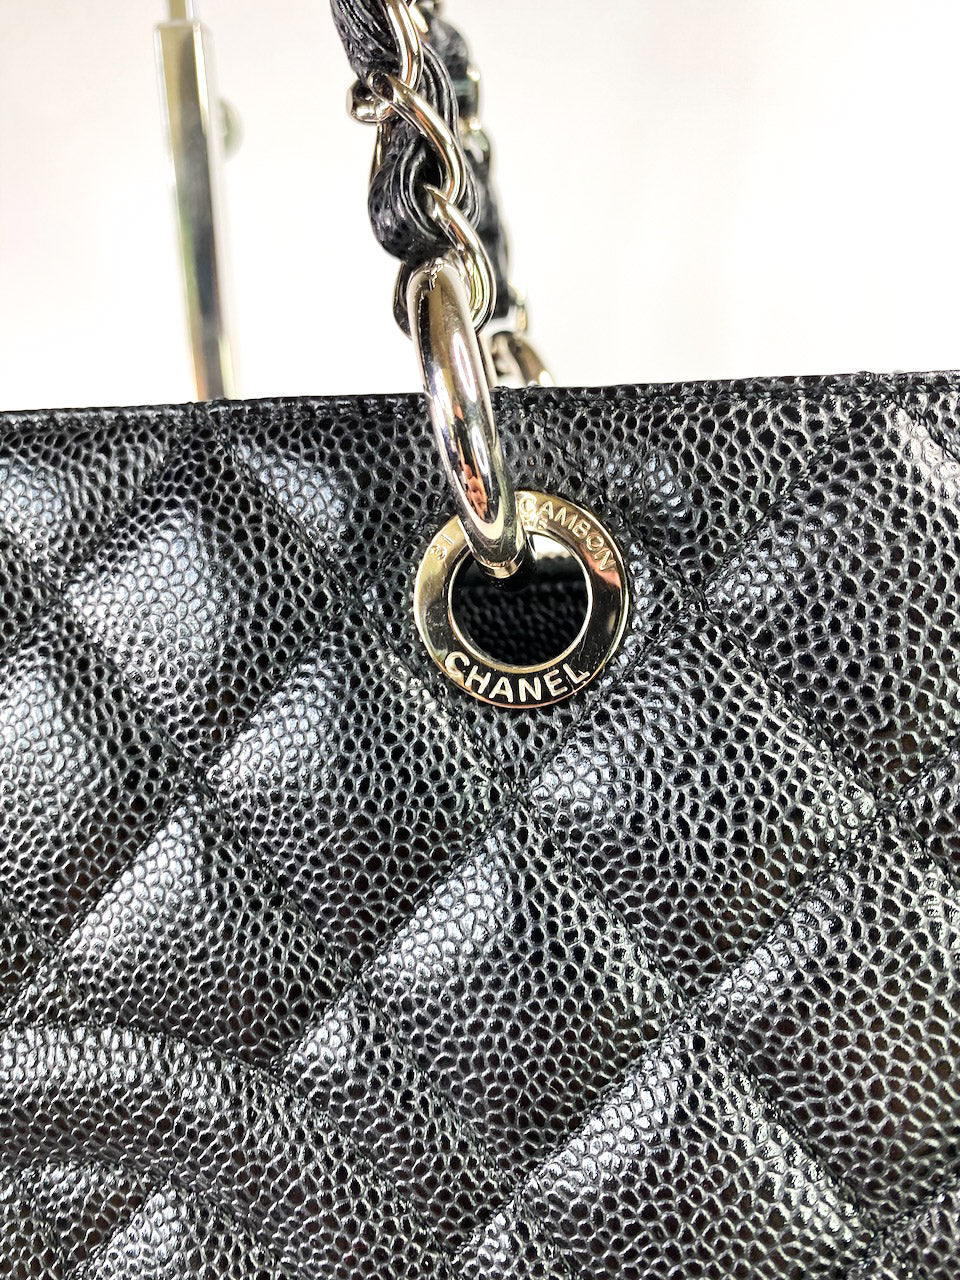 Chanel Grand Shopper Tote - As Seen on Instagram Live 12/07/20 - Siopaella Designer Exchange